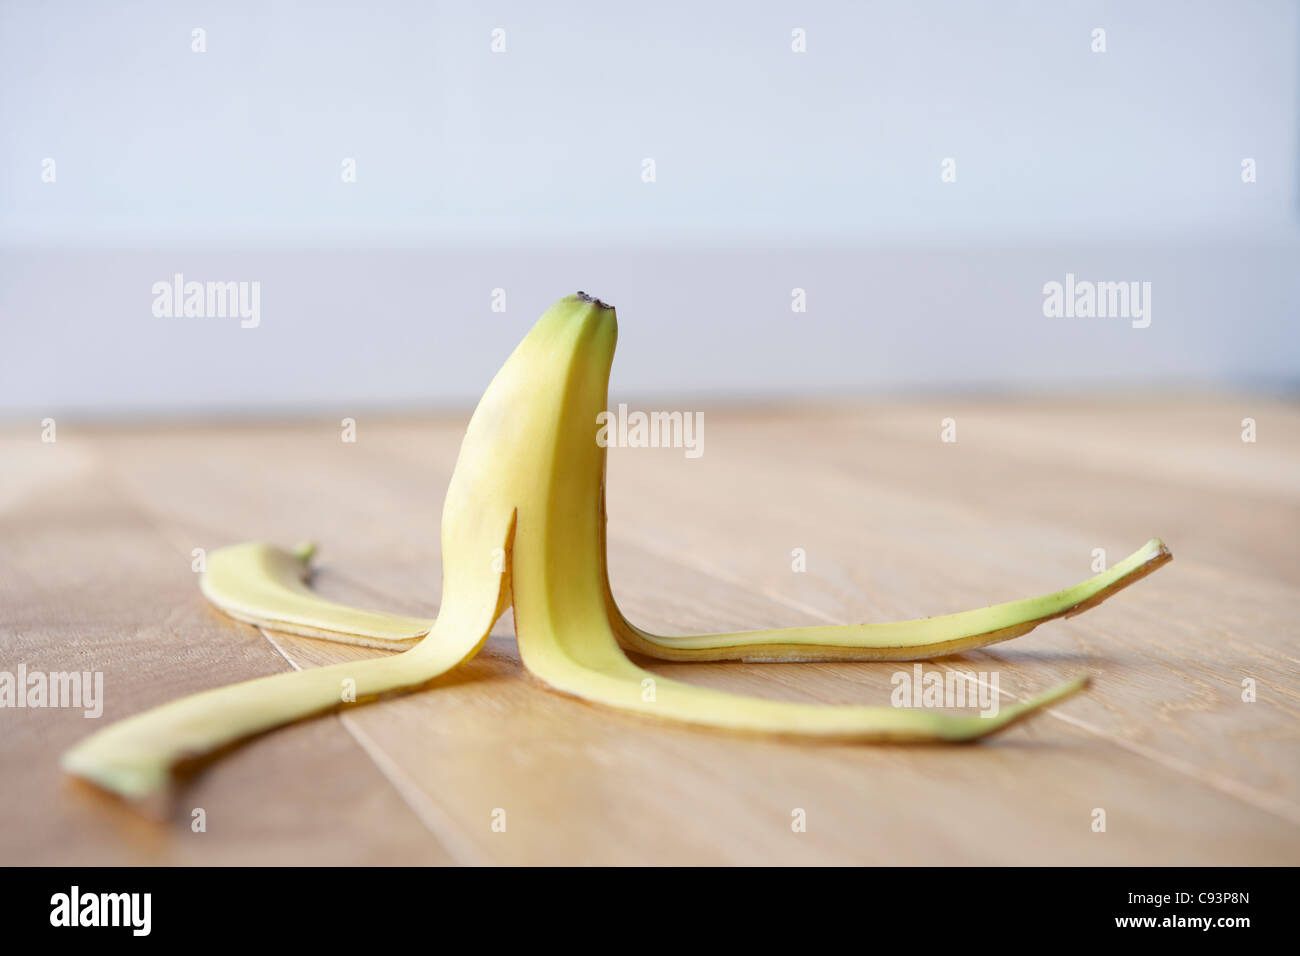 Banana skin on floor Stock Photo